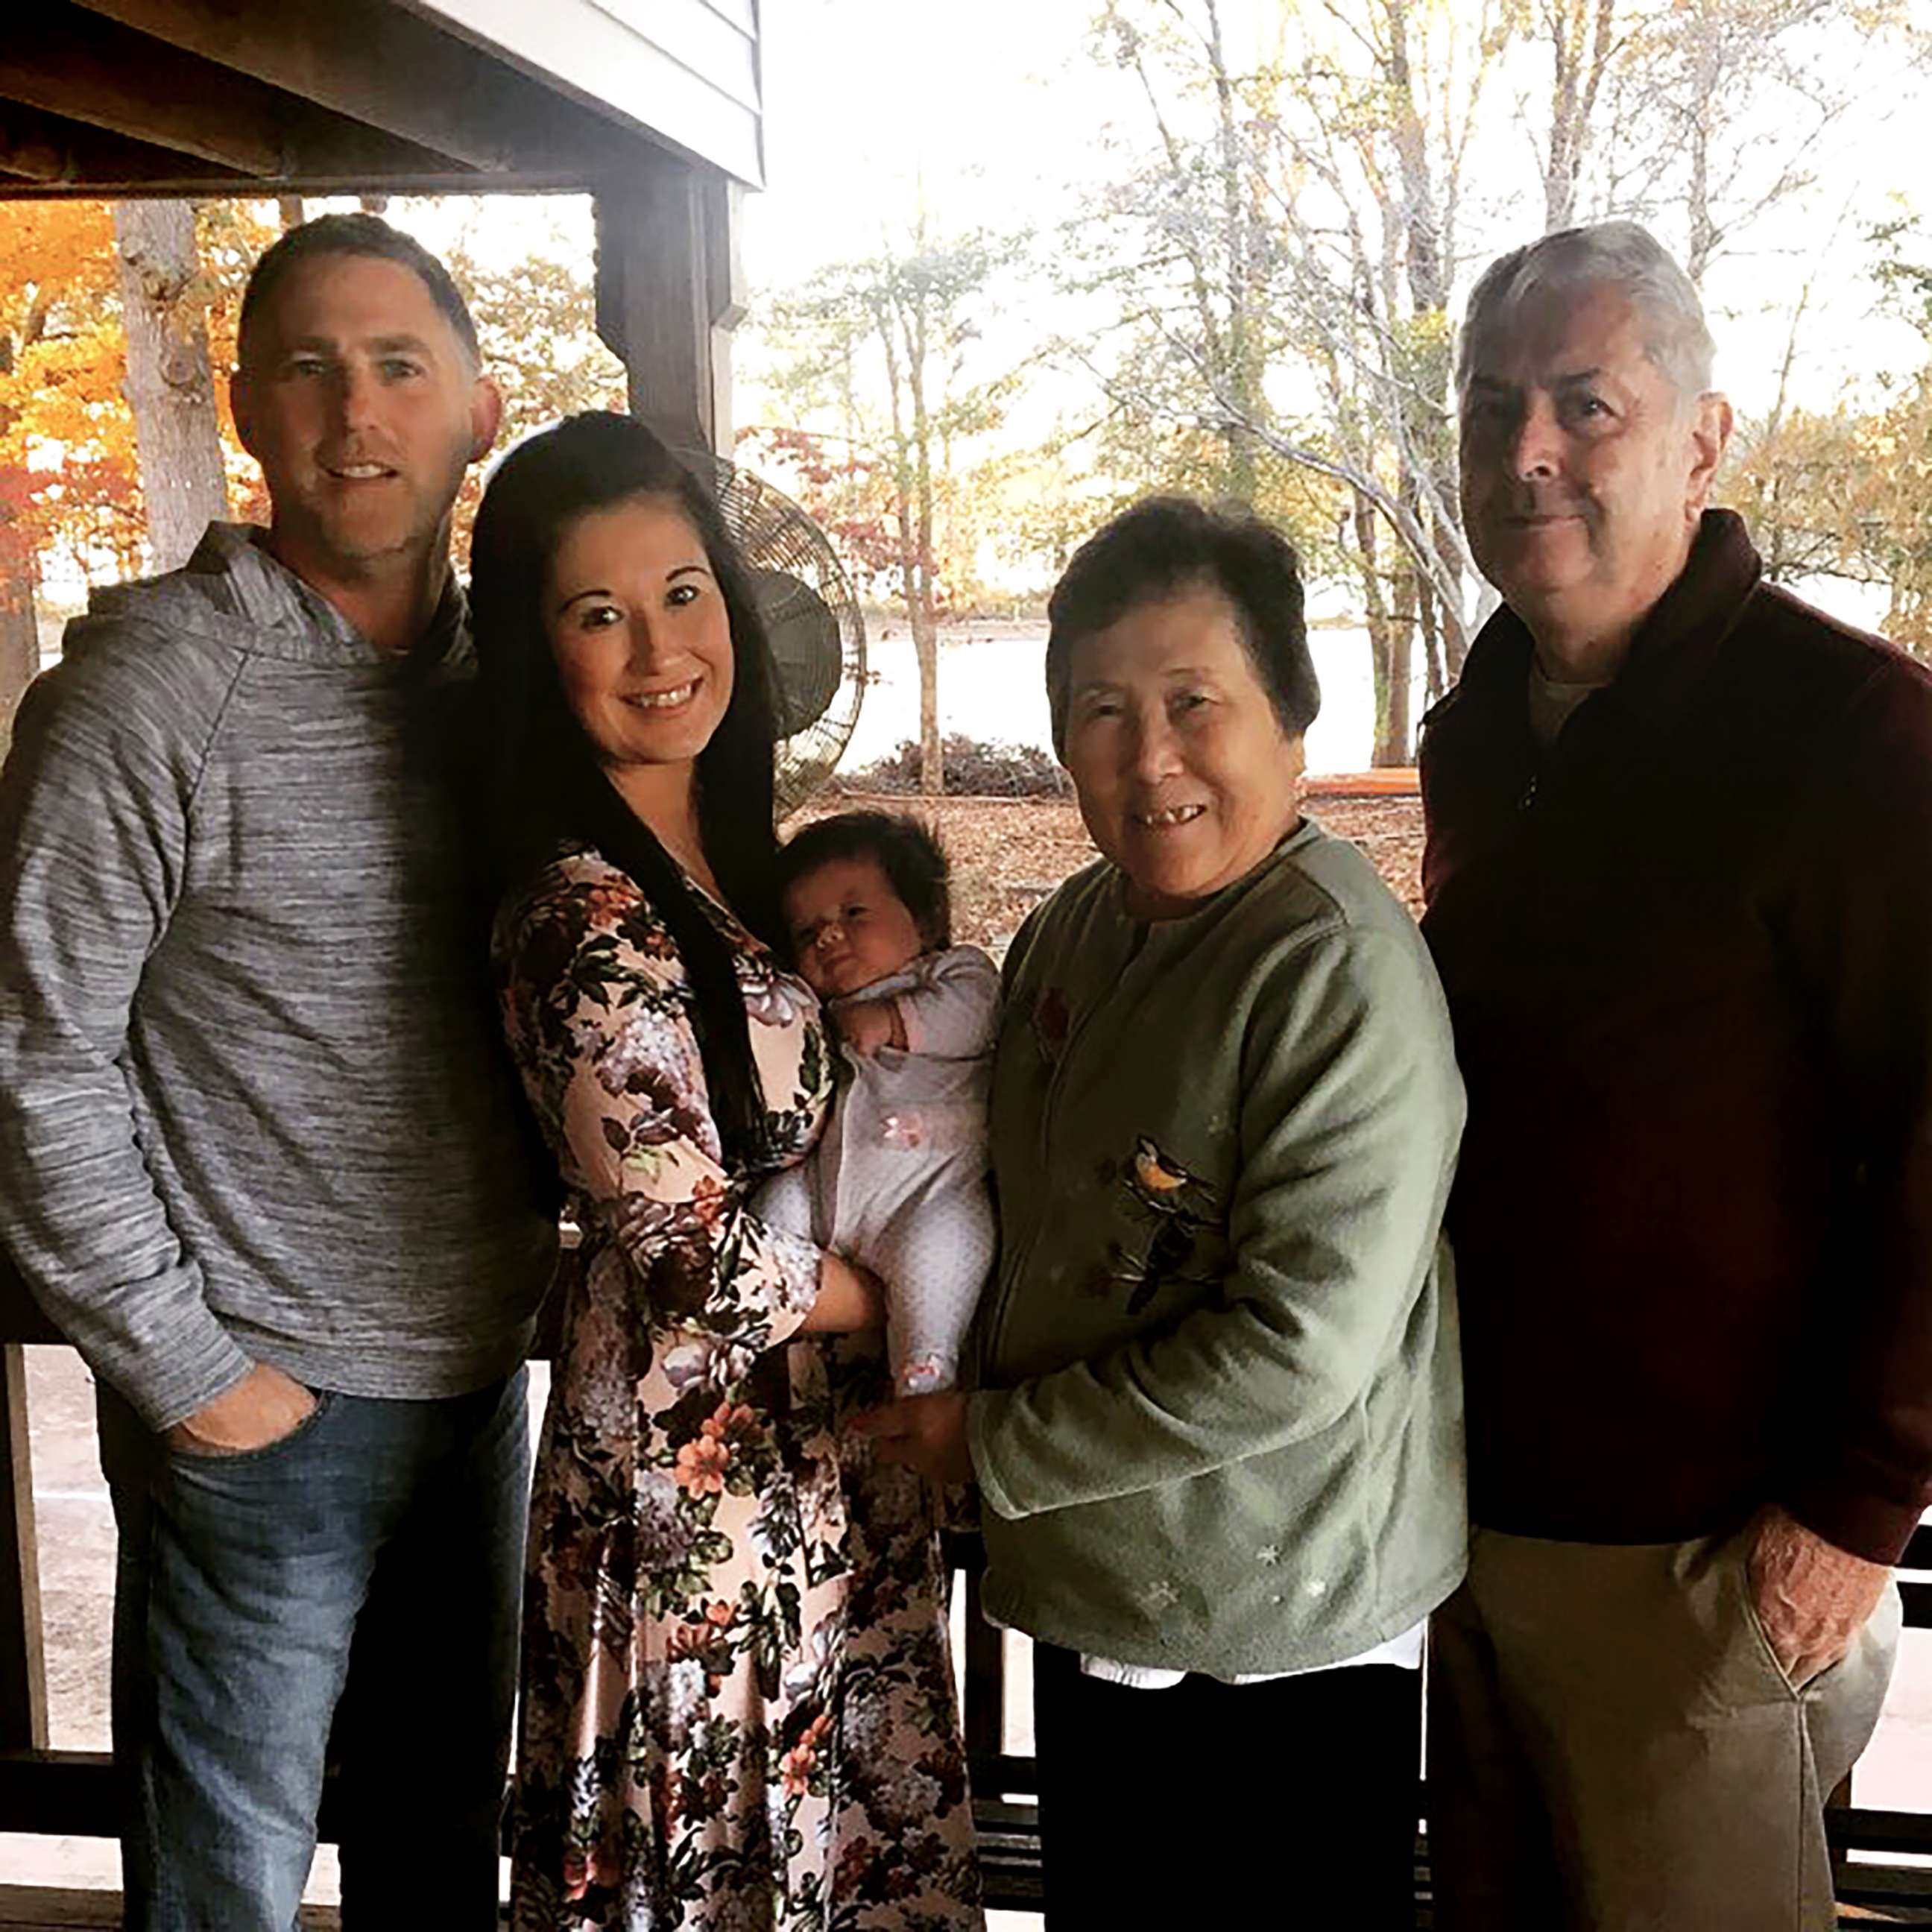 PHOTO: Brad and Christine Stone with their newborn baby, Sadie Mae Stone, along with their parents Setsuko and Robert Harmon.